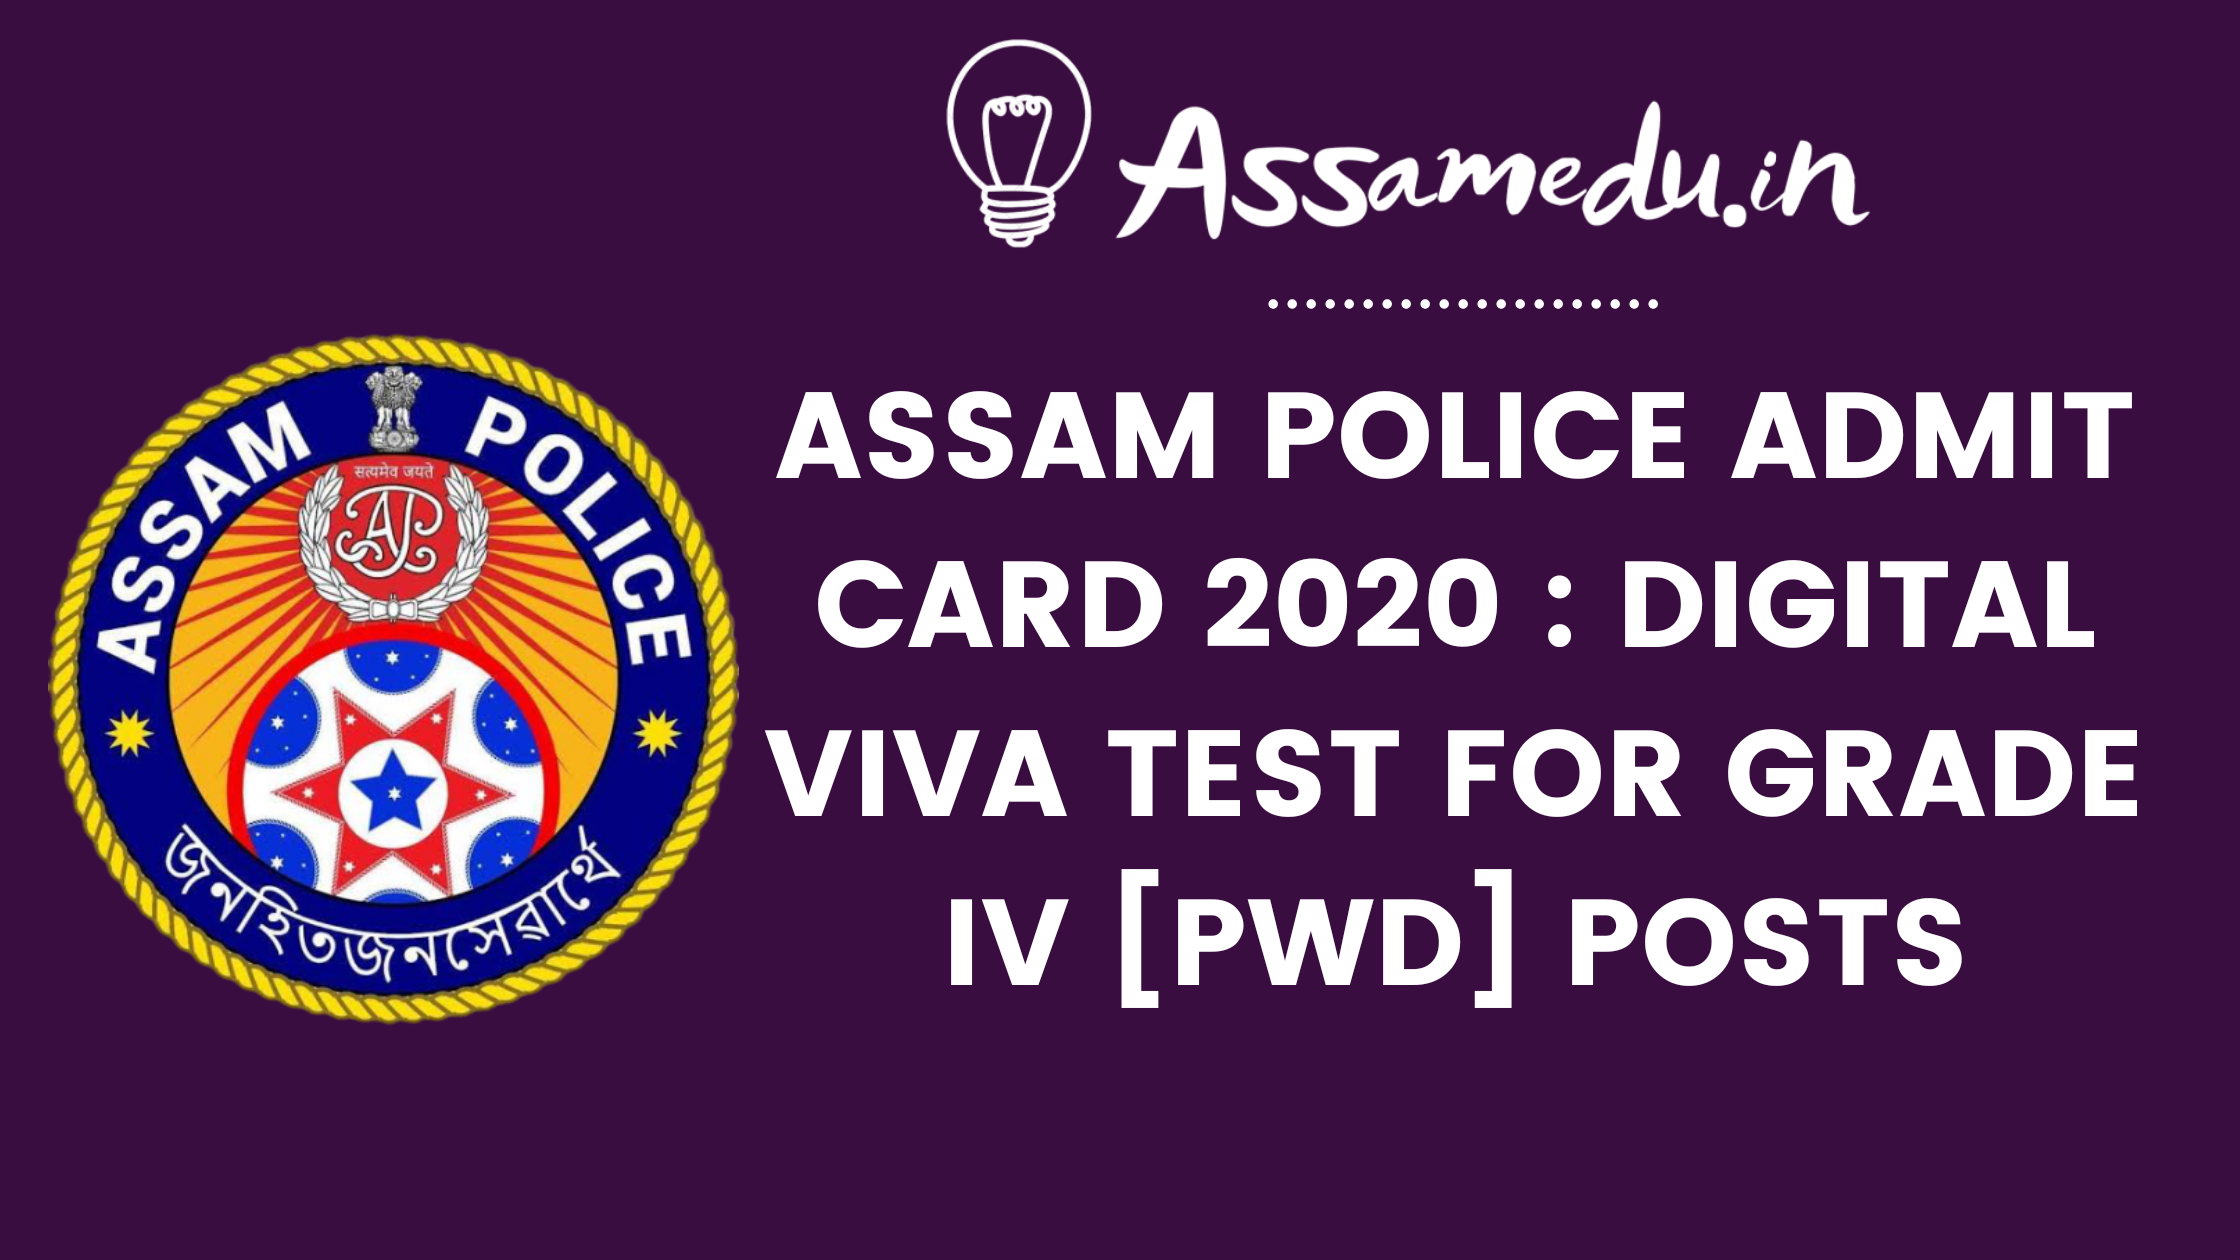 Assam Police Admit Card 2020